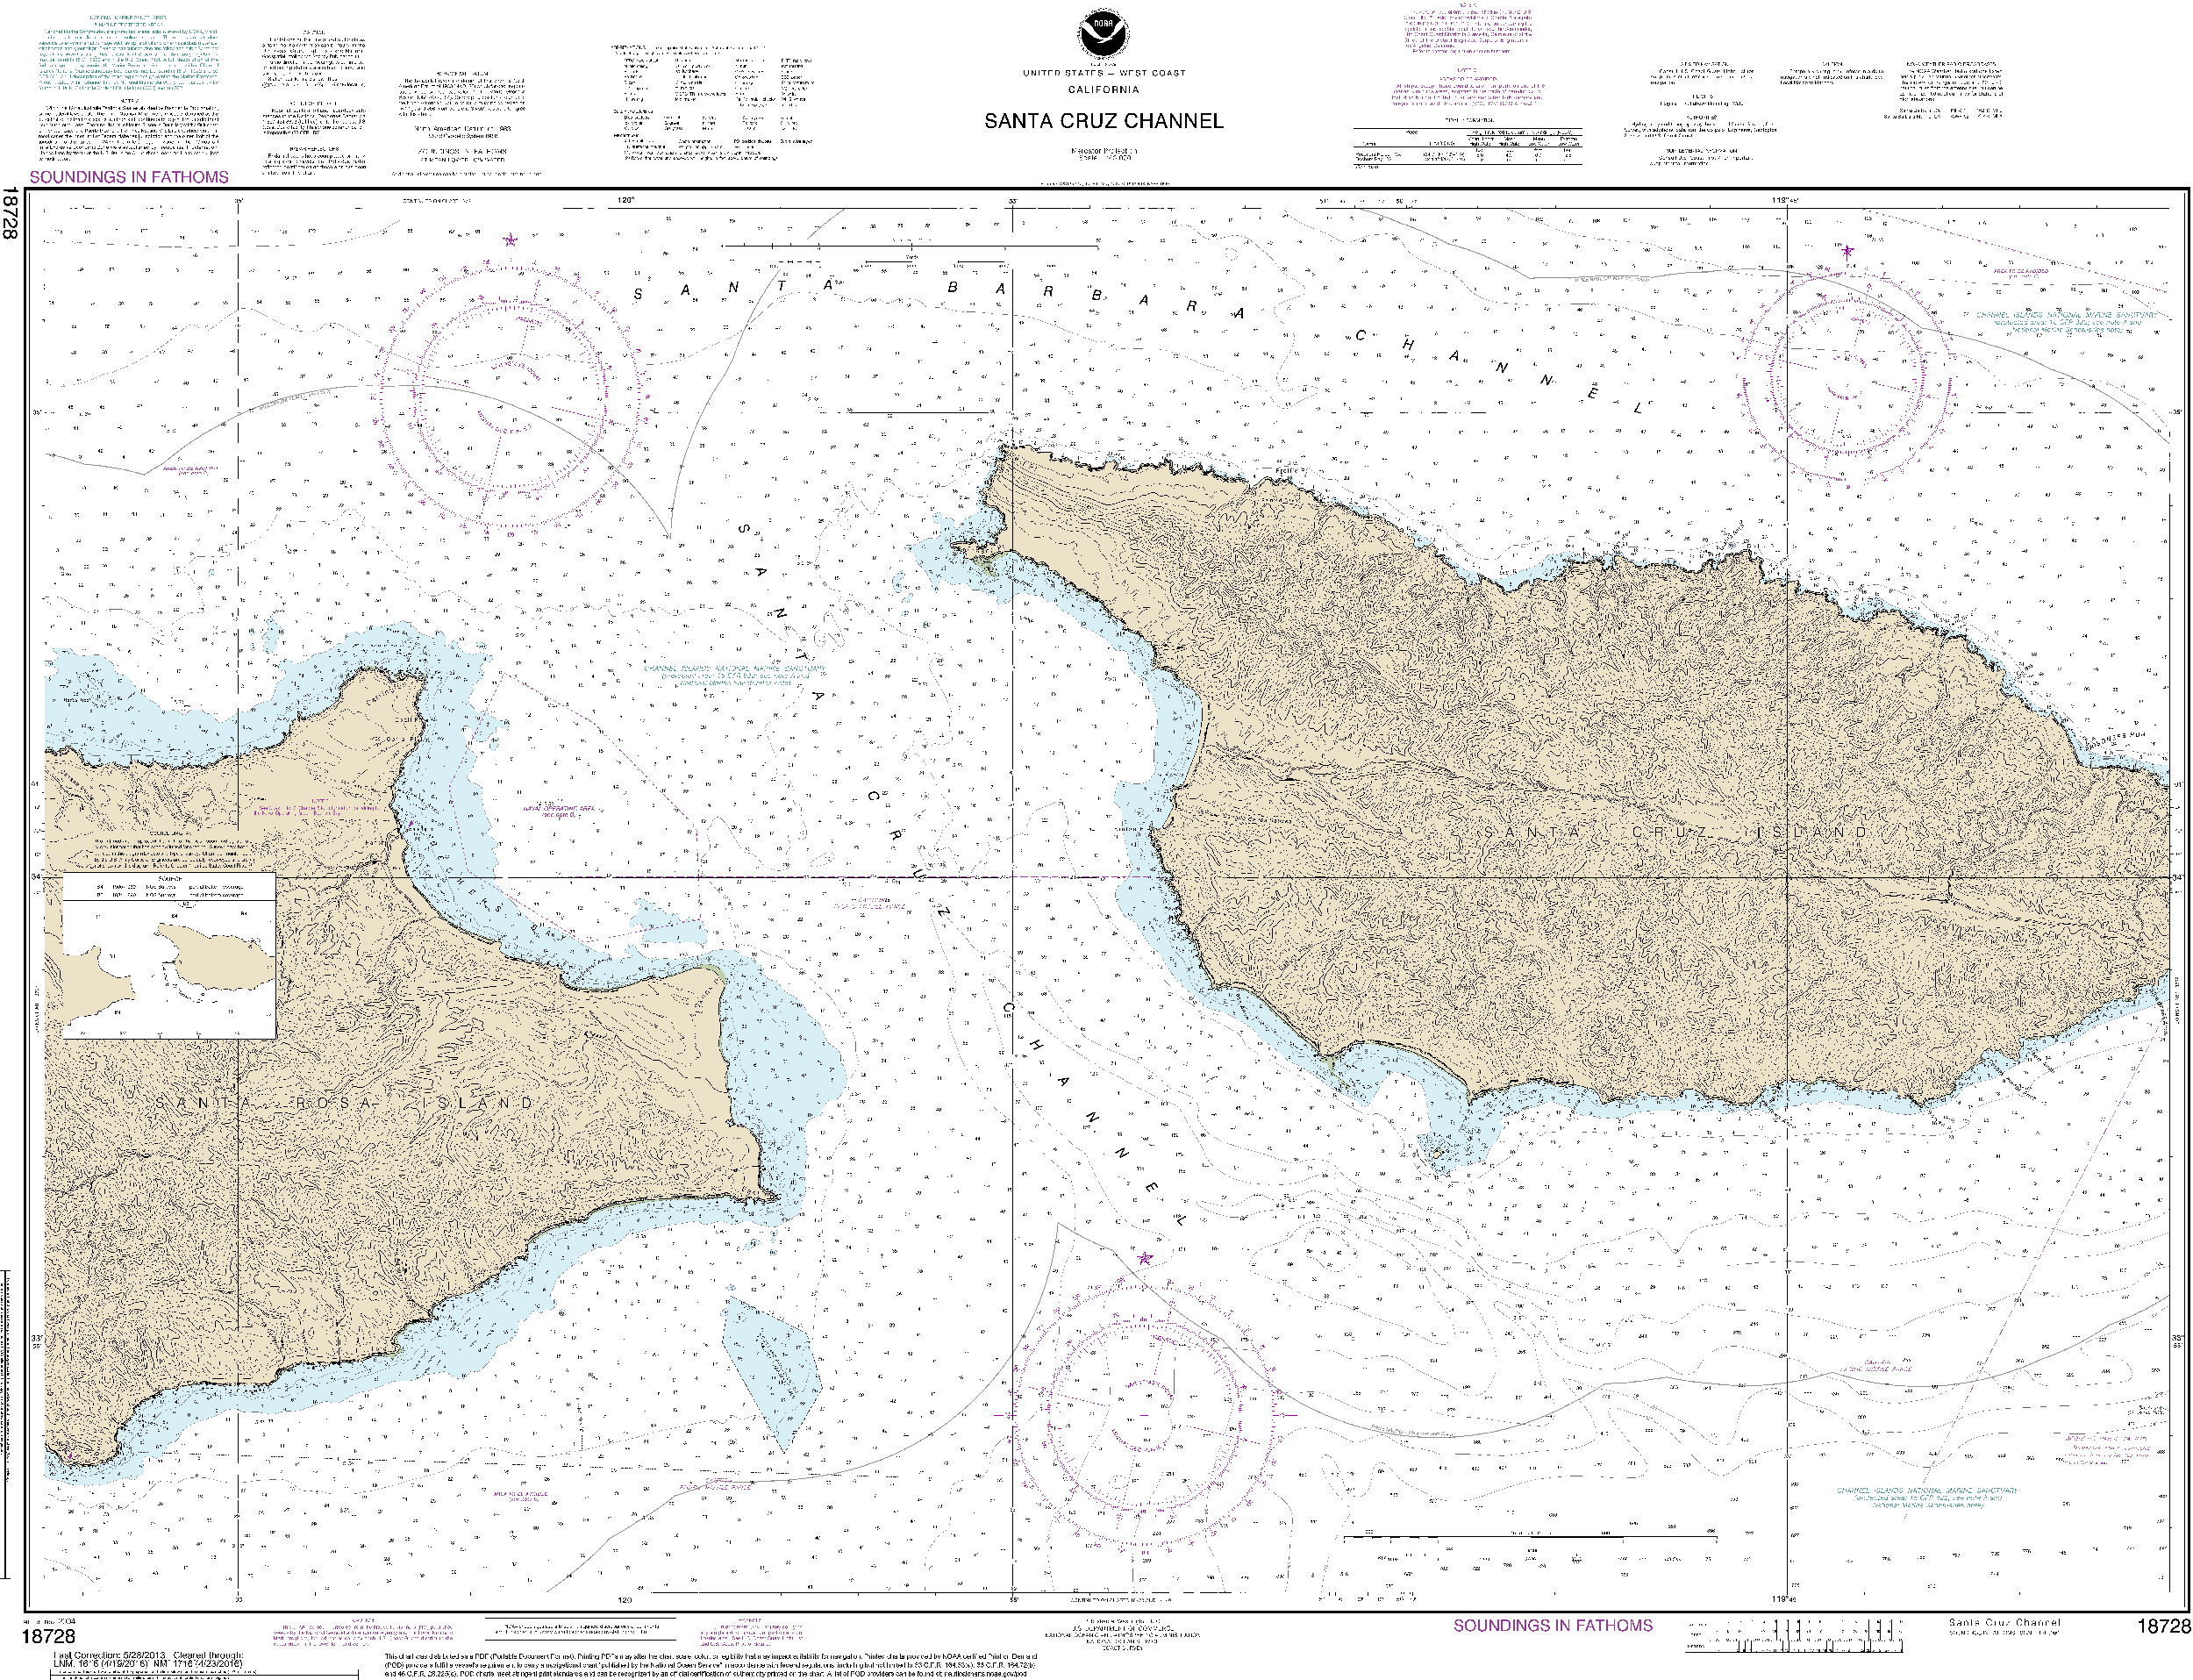 NOAA Nautical Chart 18728: Santa Cruz Channel